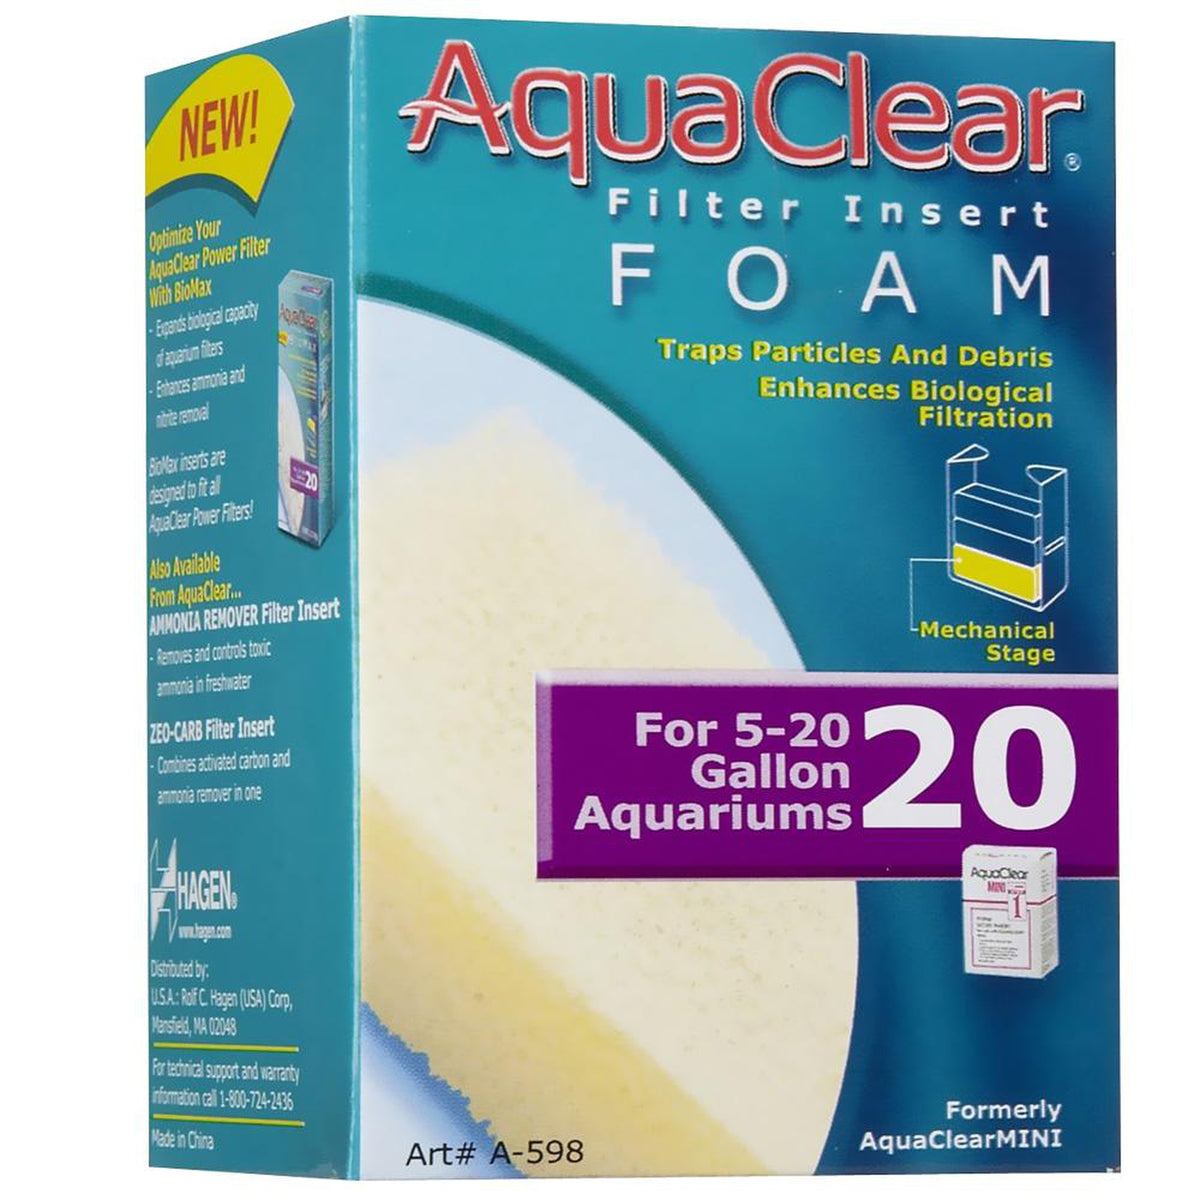 AquaClear 20 Foam Insert